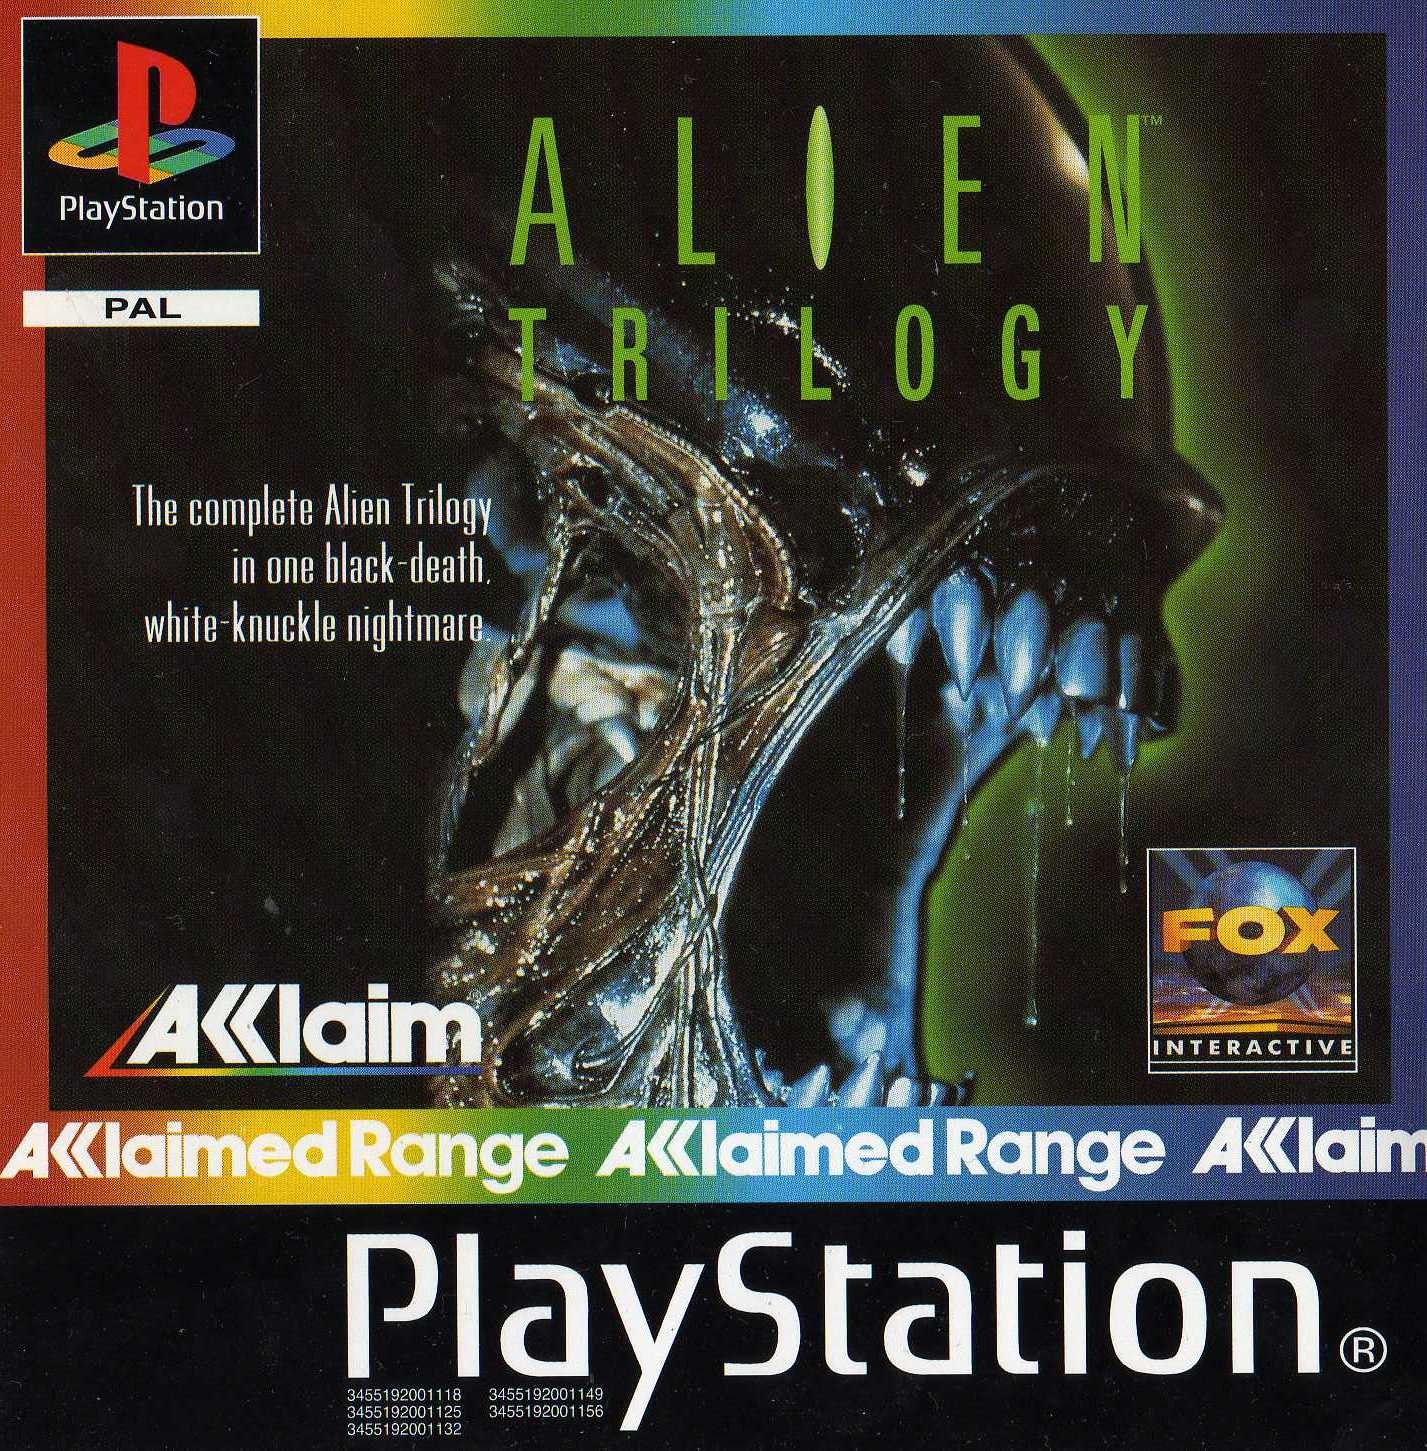 Alien trilogy. Alien Resurrection ps1 обложка. Ps1 2 в 1 Alien Trilogy. Alien Trilogy PLAYSTATION 1. Alien Trilogy ps1 Covers DVD.